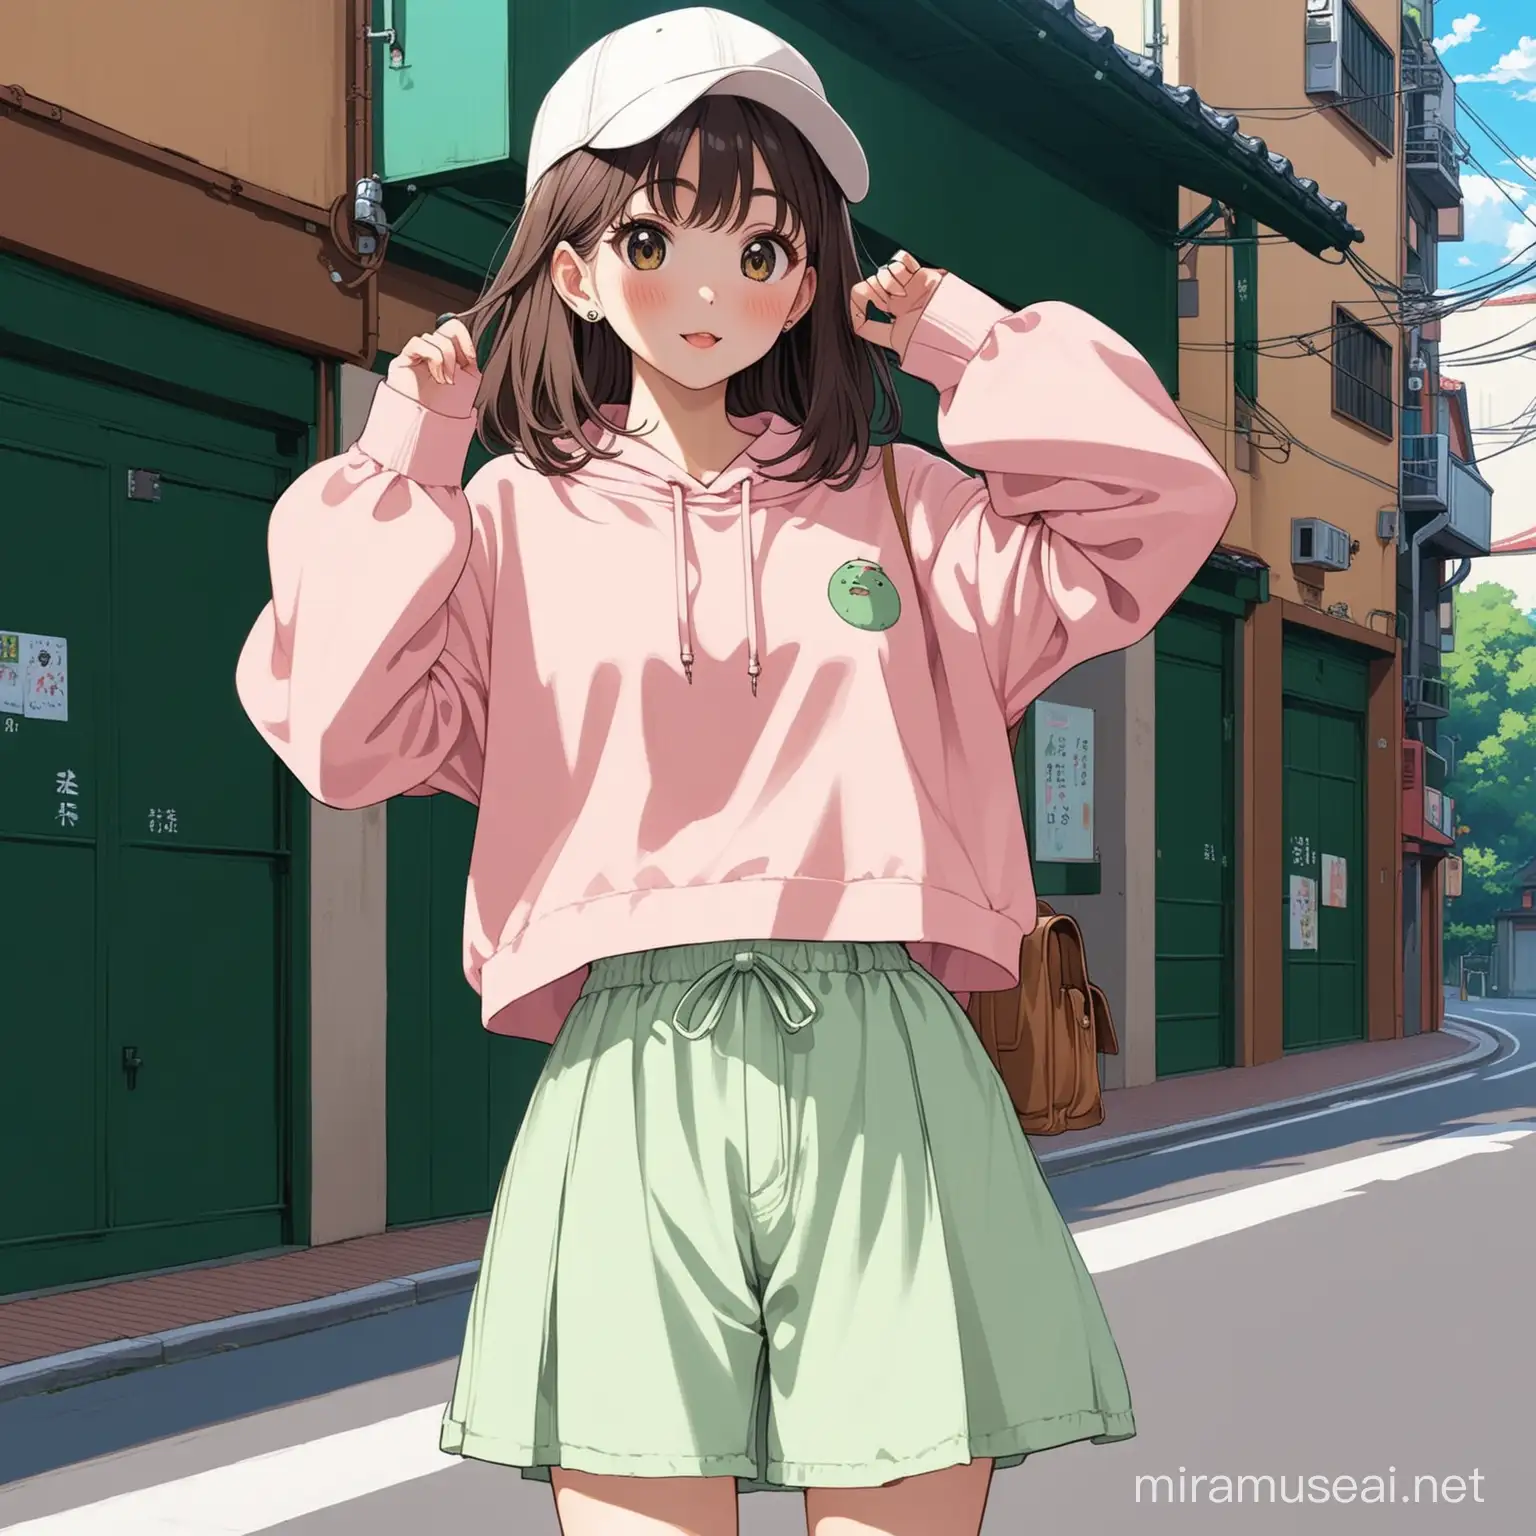 Adorable Girl in Trendy Streetwear Niji 5 Style Inspired by Ghibli